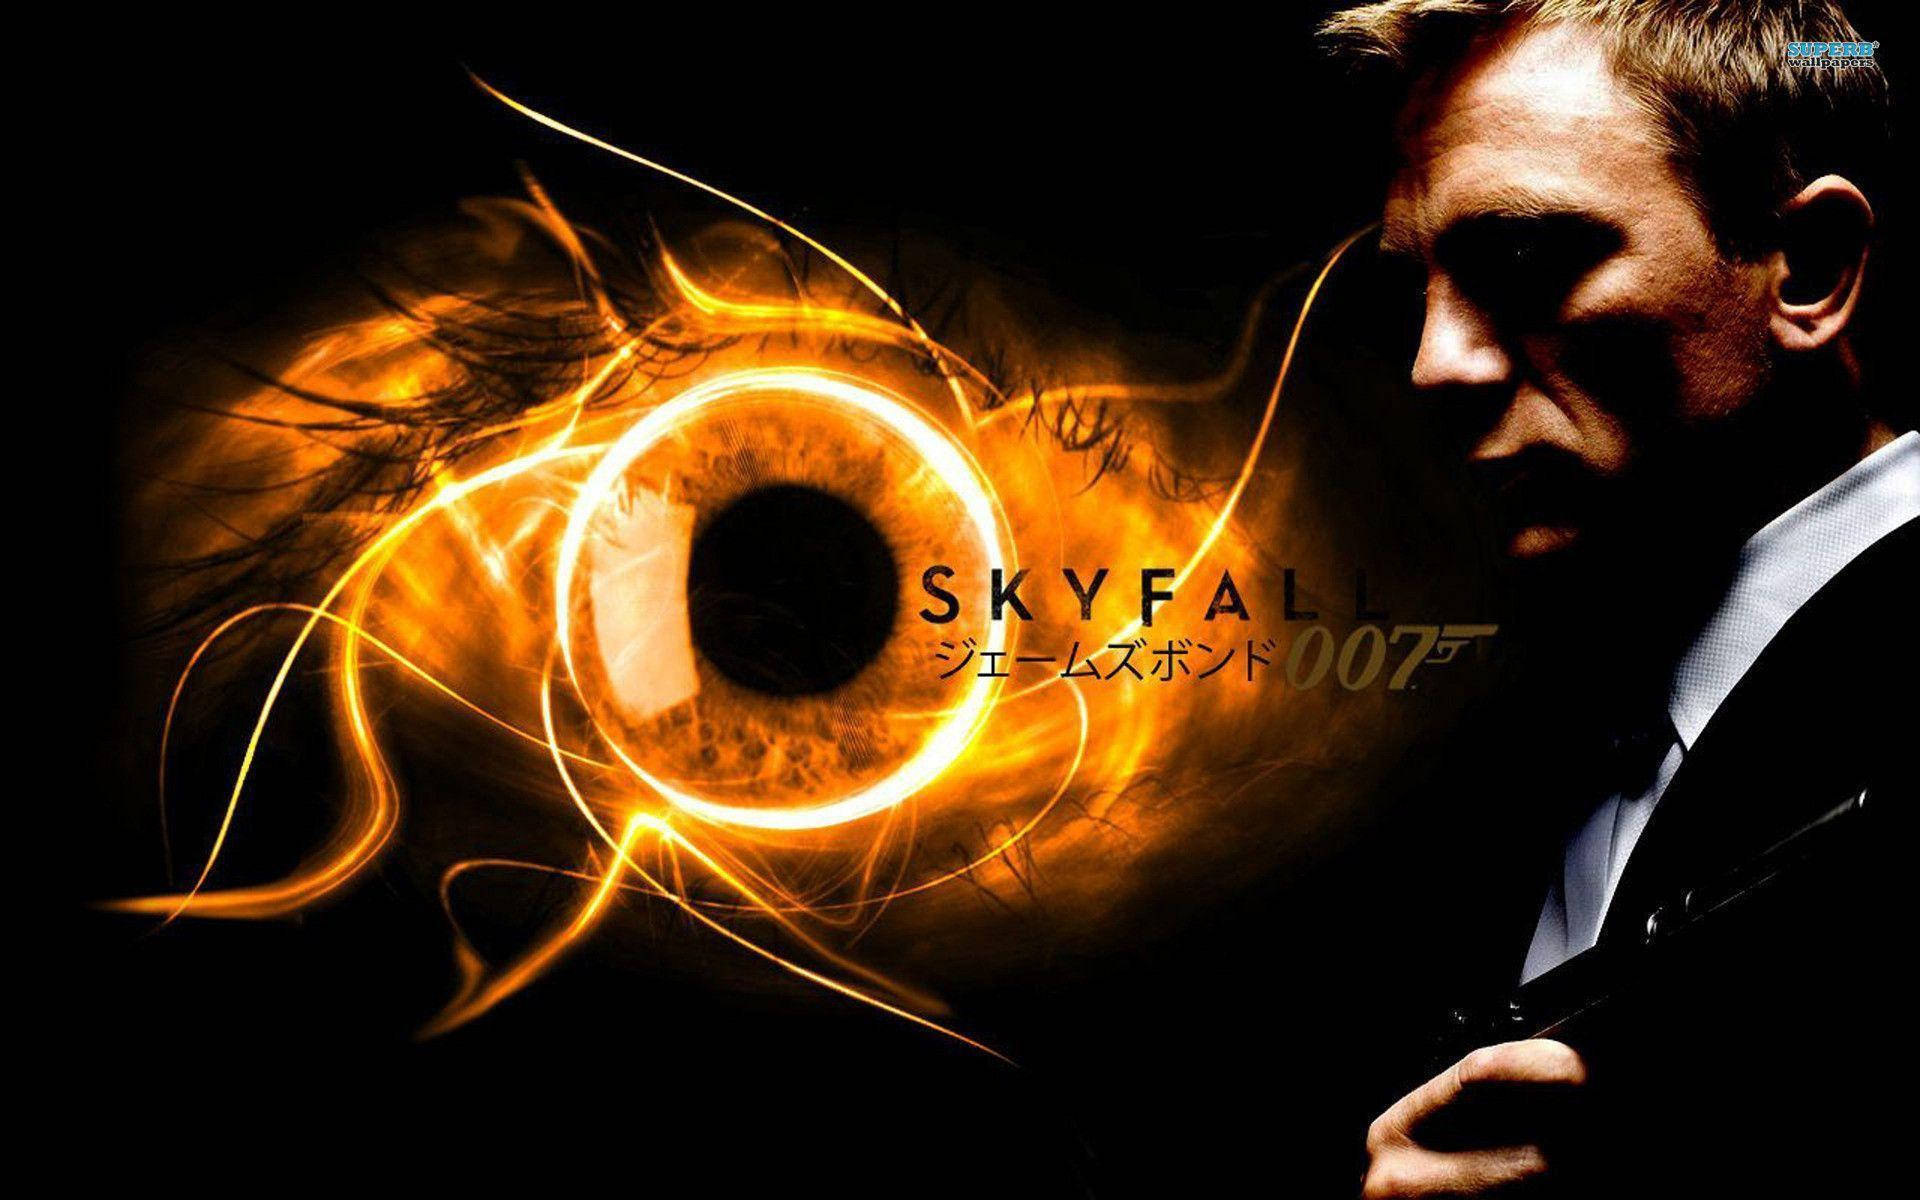 James Bond Skyfall Blazing Poster